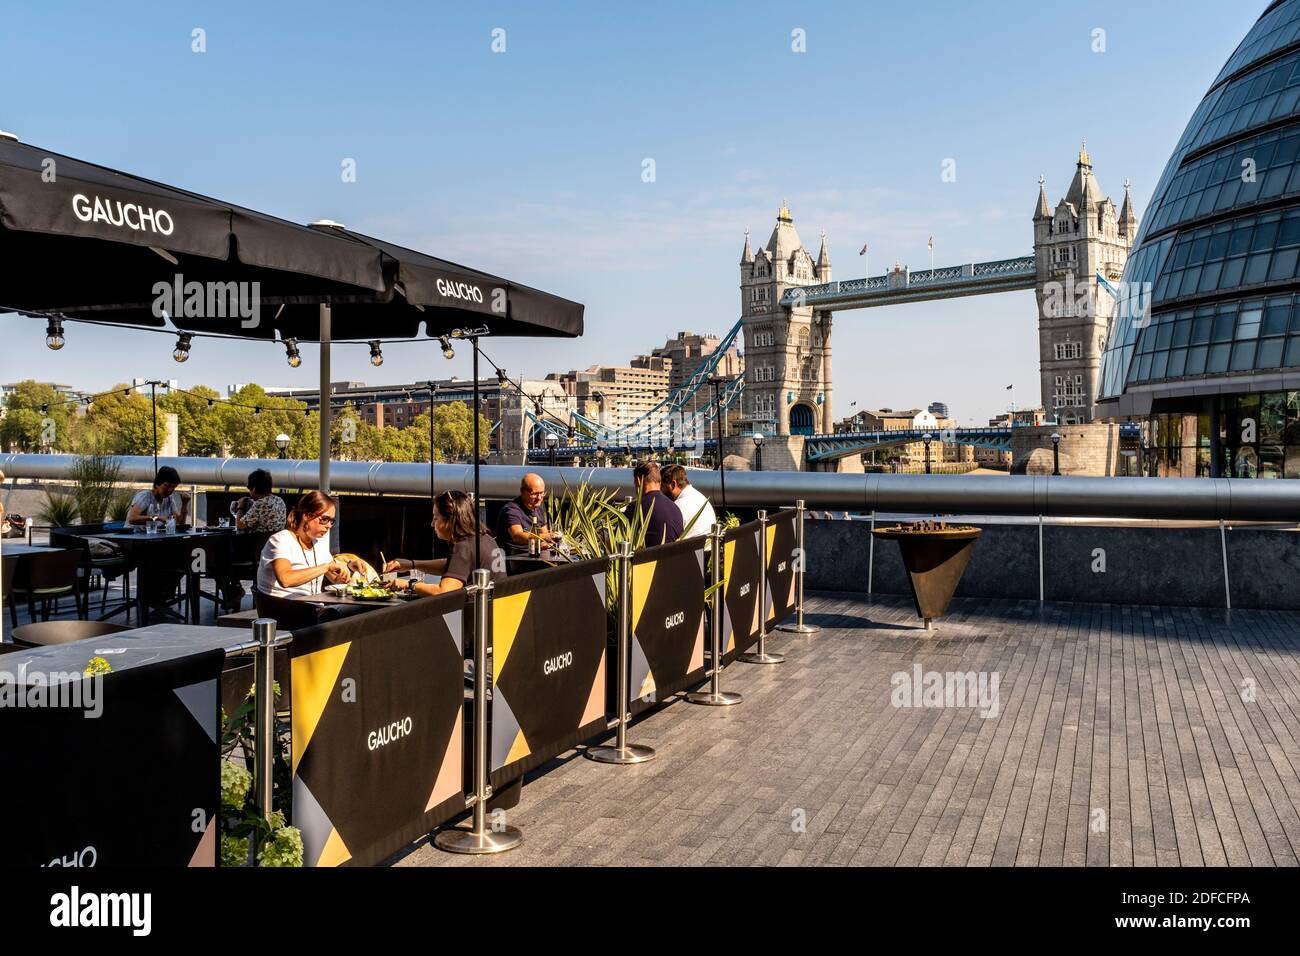 People Eating Outdoors At The Gaucho Restaurant, London Bridge City Area, London, UK. Stock Photo